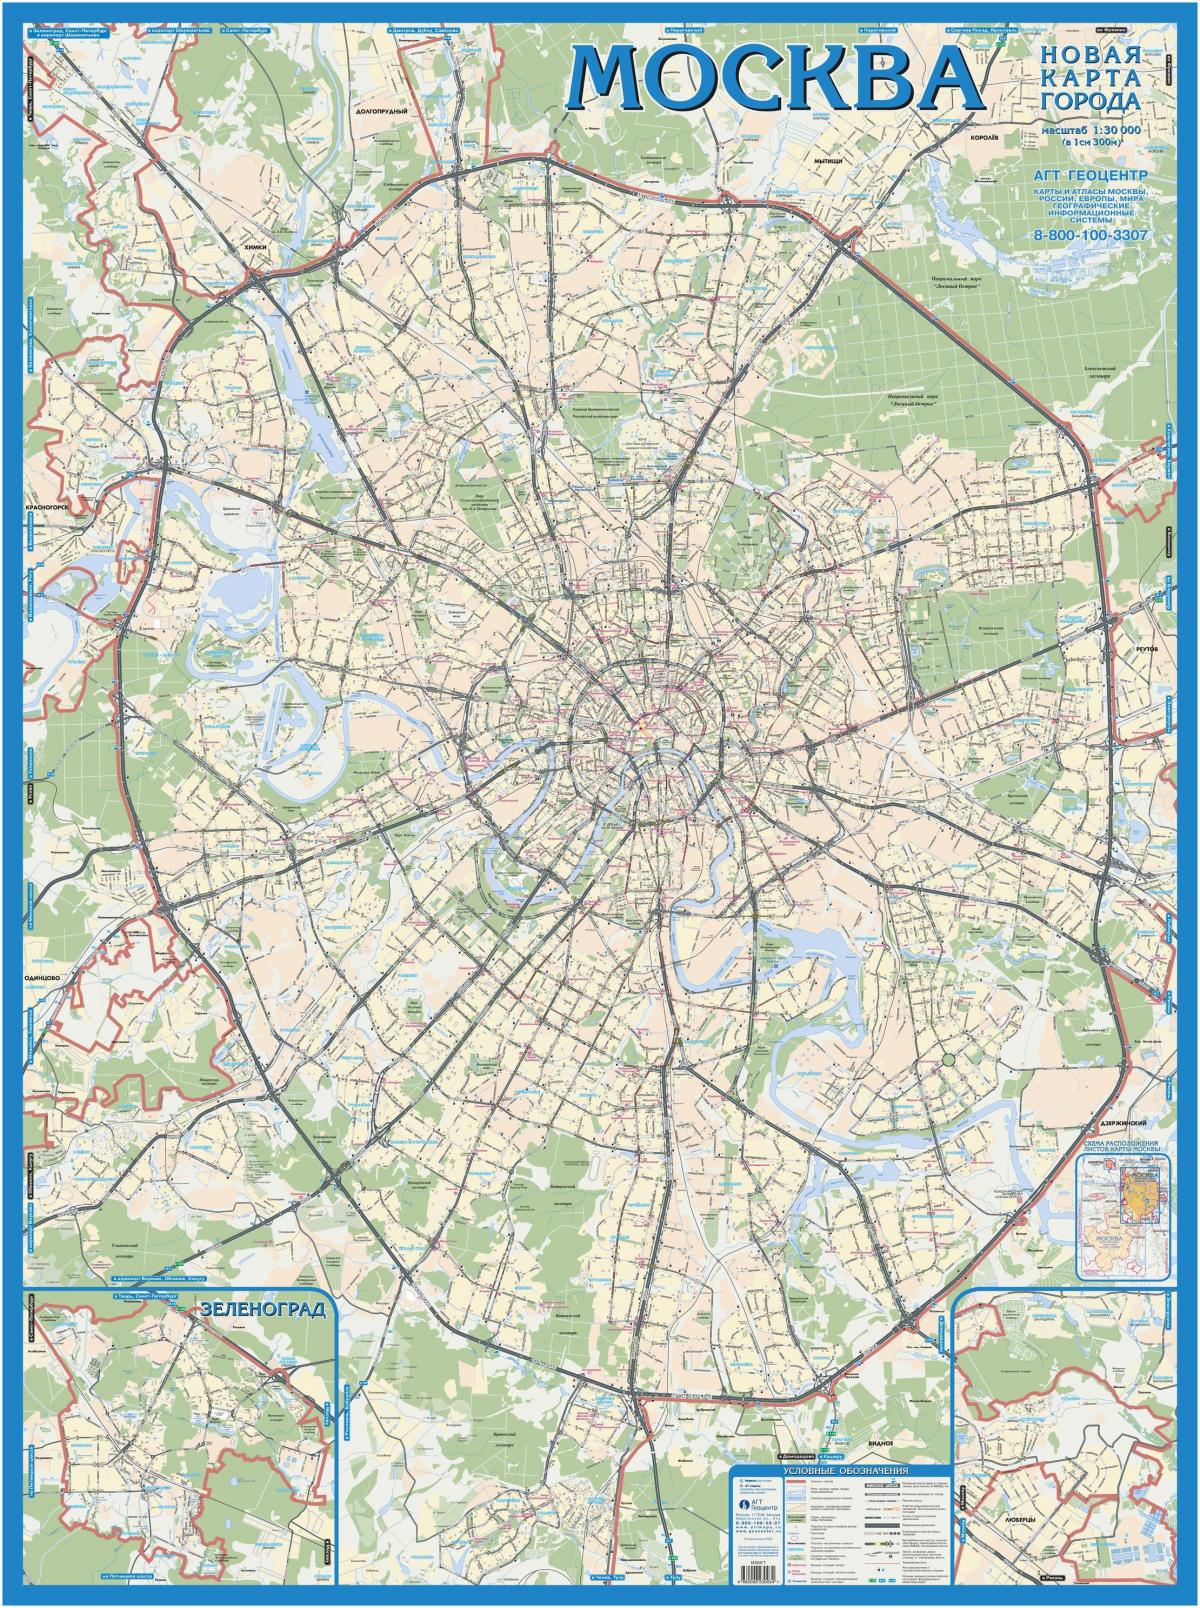 Moskva topographic แผนที่